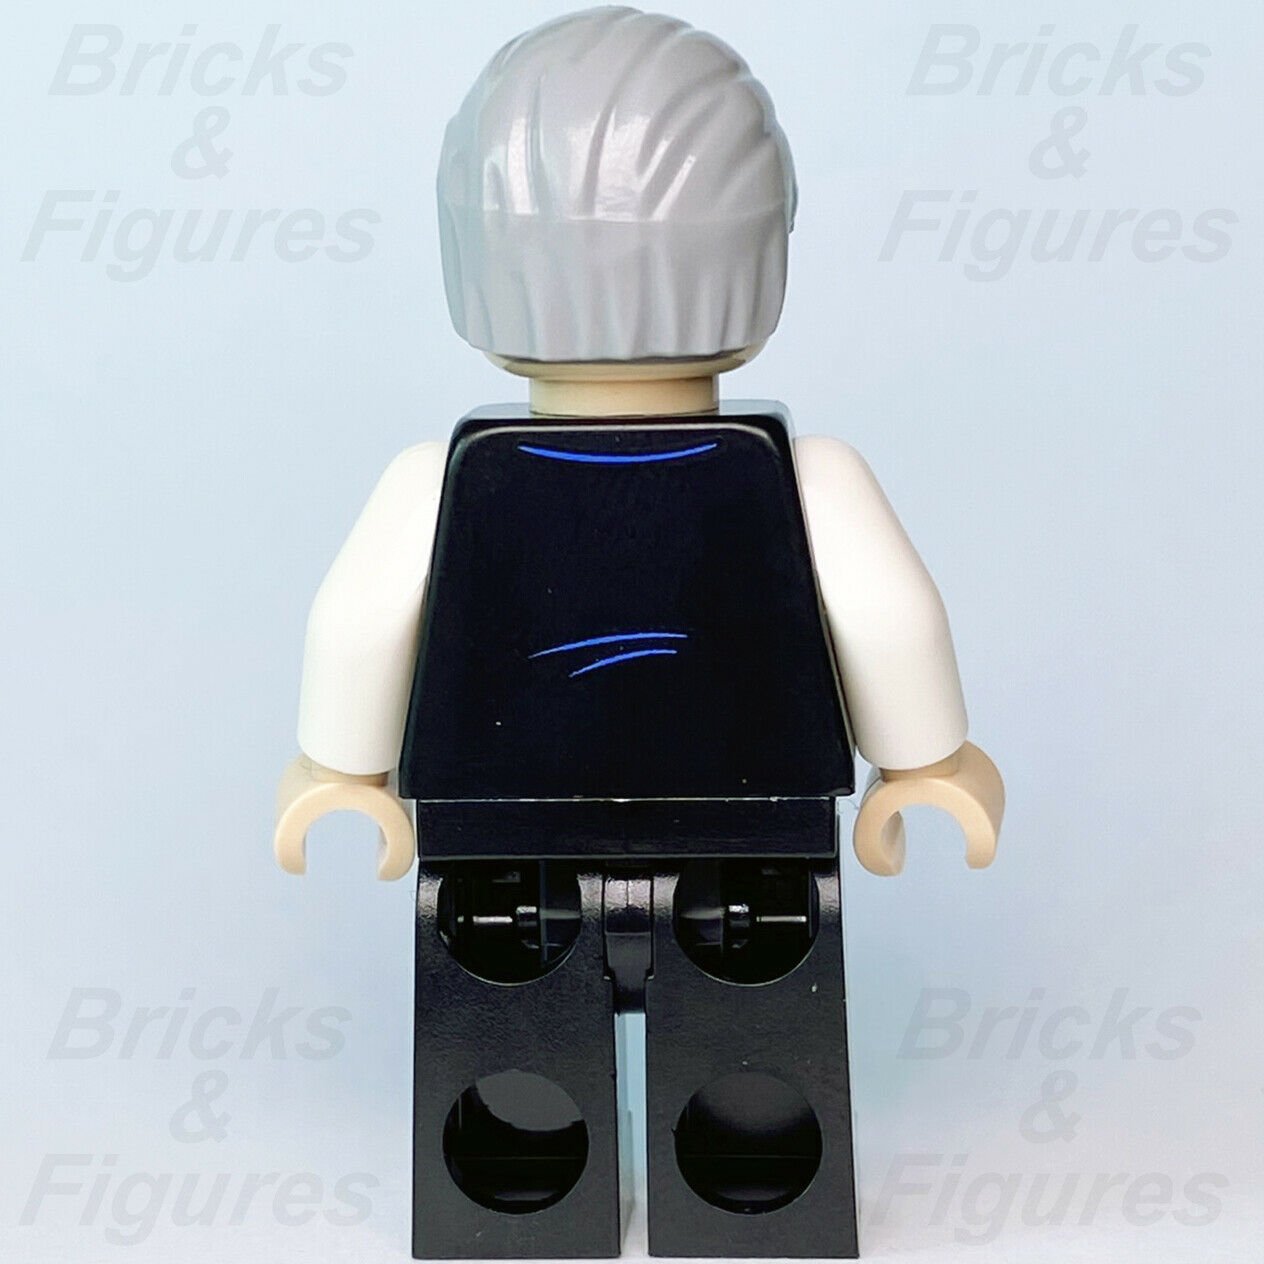 DC Super Heroes LEGO Alfred Pennyworth Butler The Batman Minifigure 76183 sh789 - Bricks & Figures